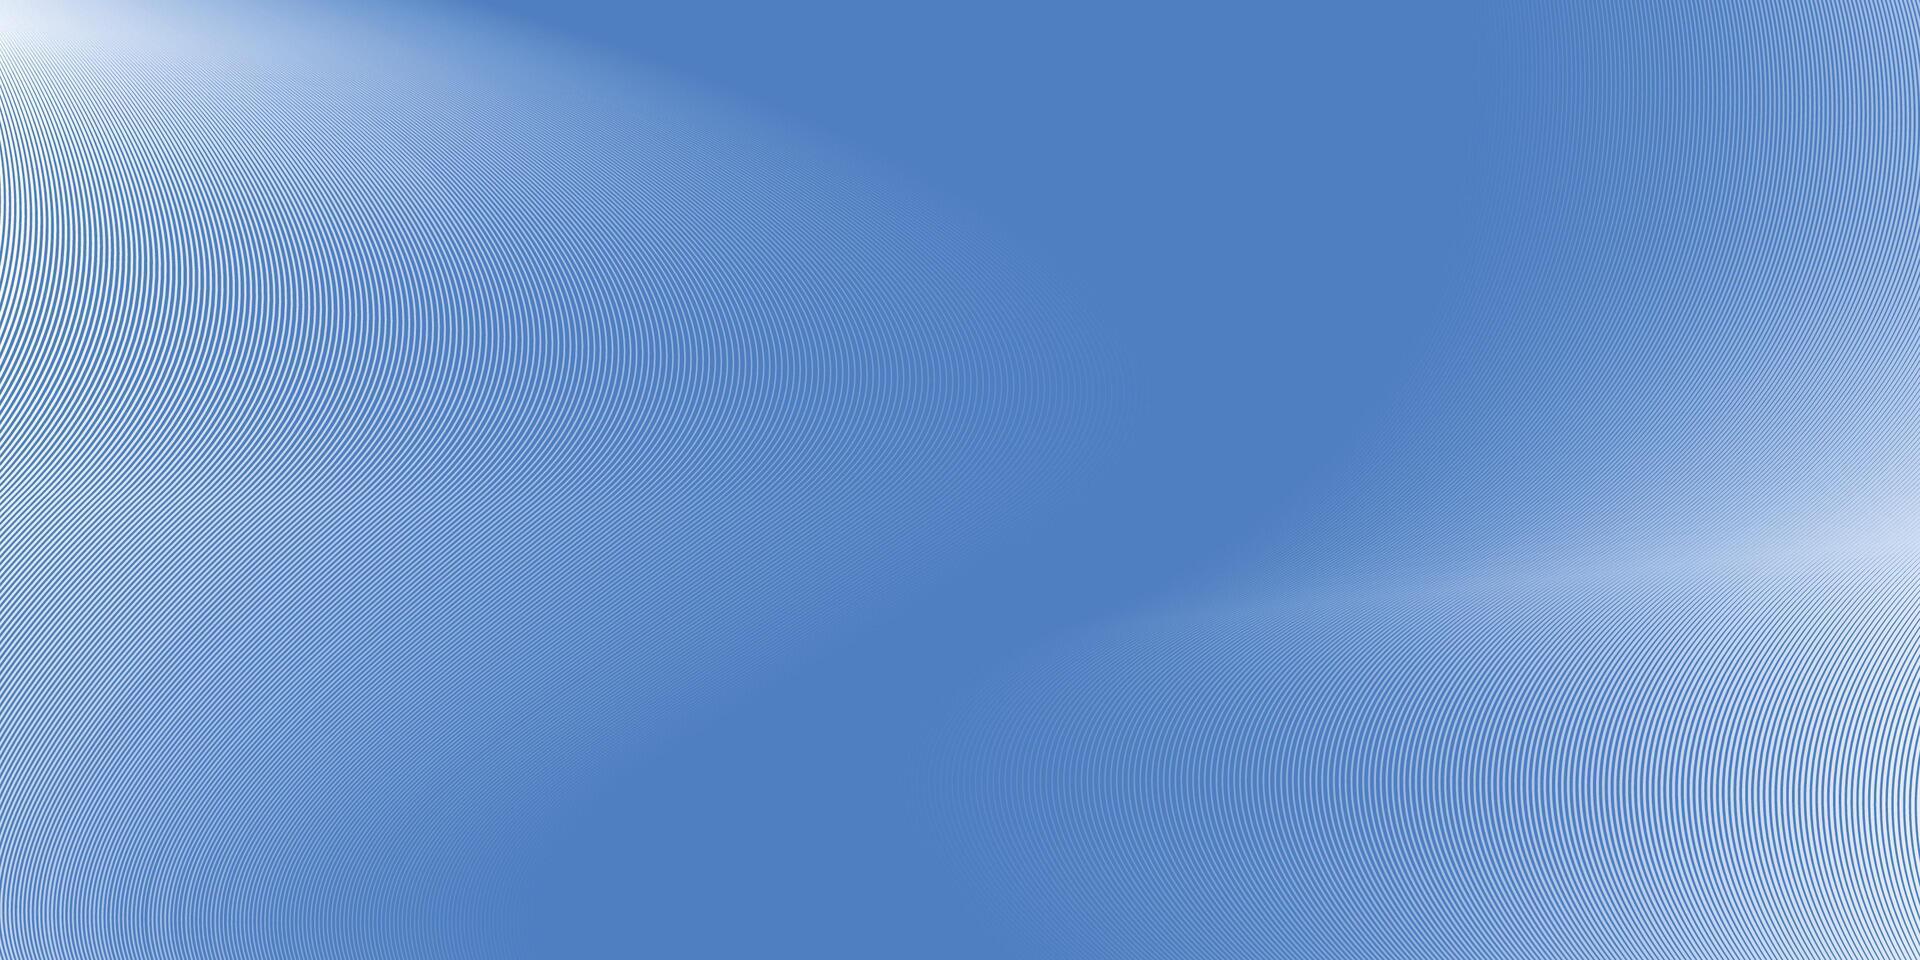 abstract blauw golvend met wazig licht gebogen lijnen achtergrond vector